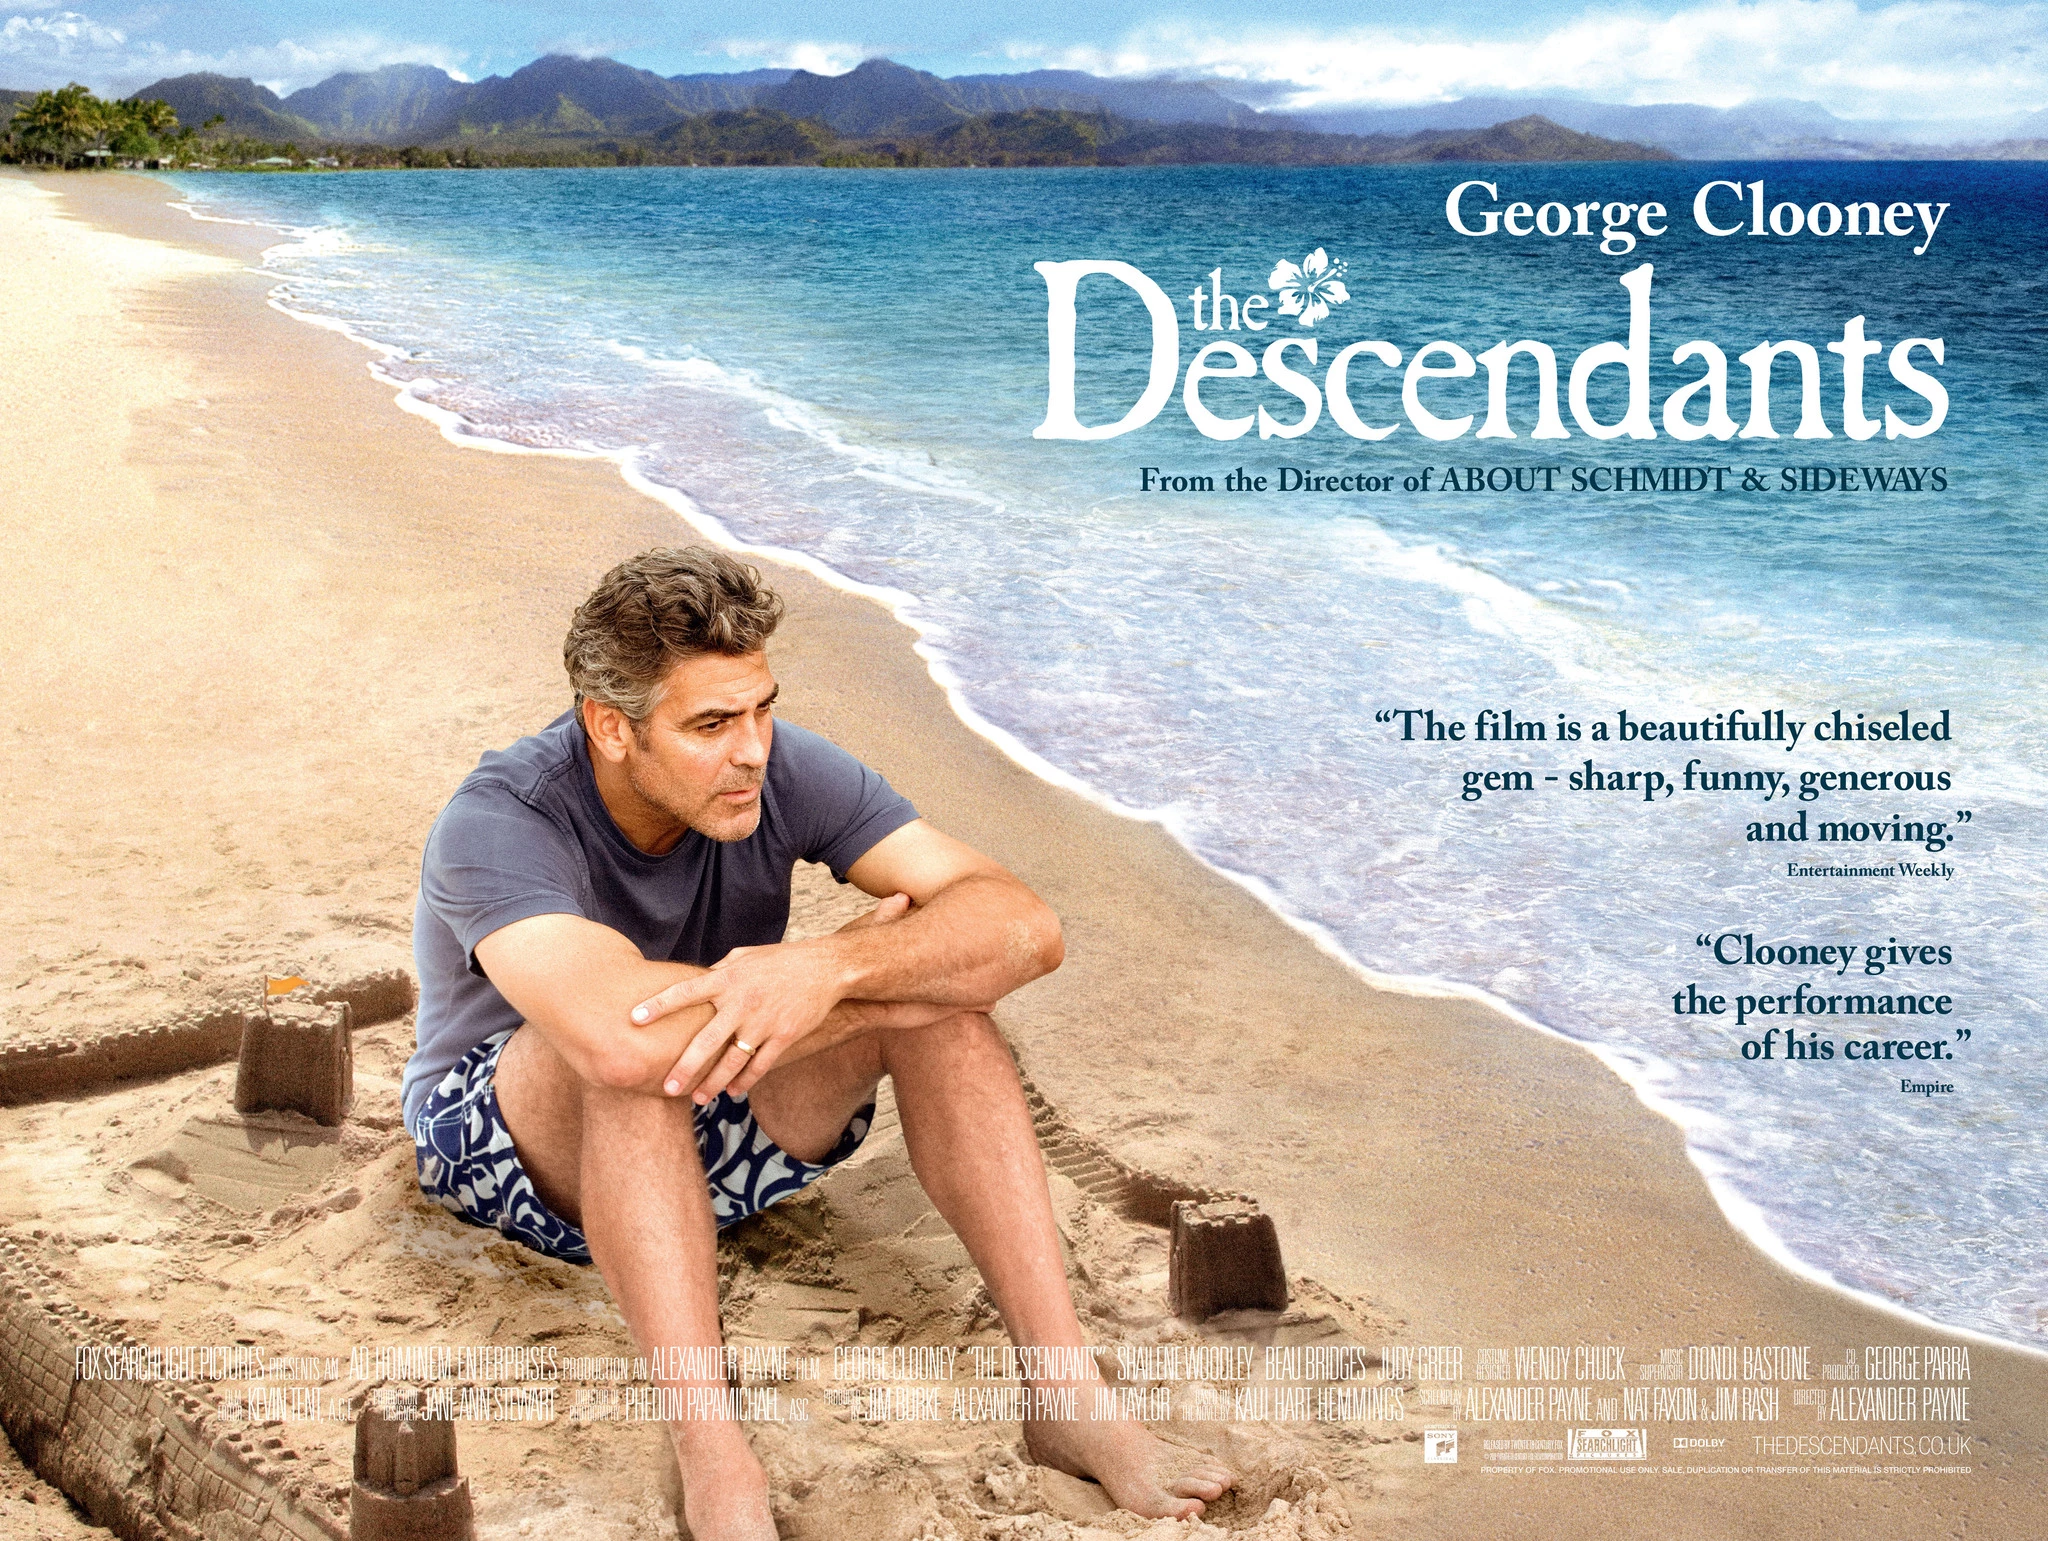 movies like little miss sunshine - The Descendants (2011)